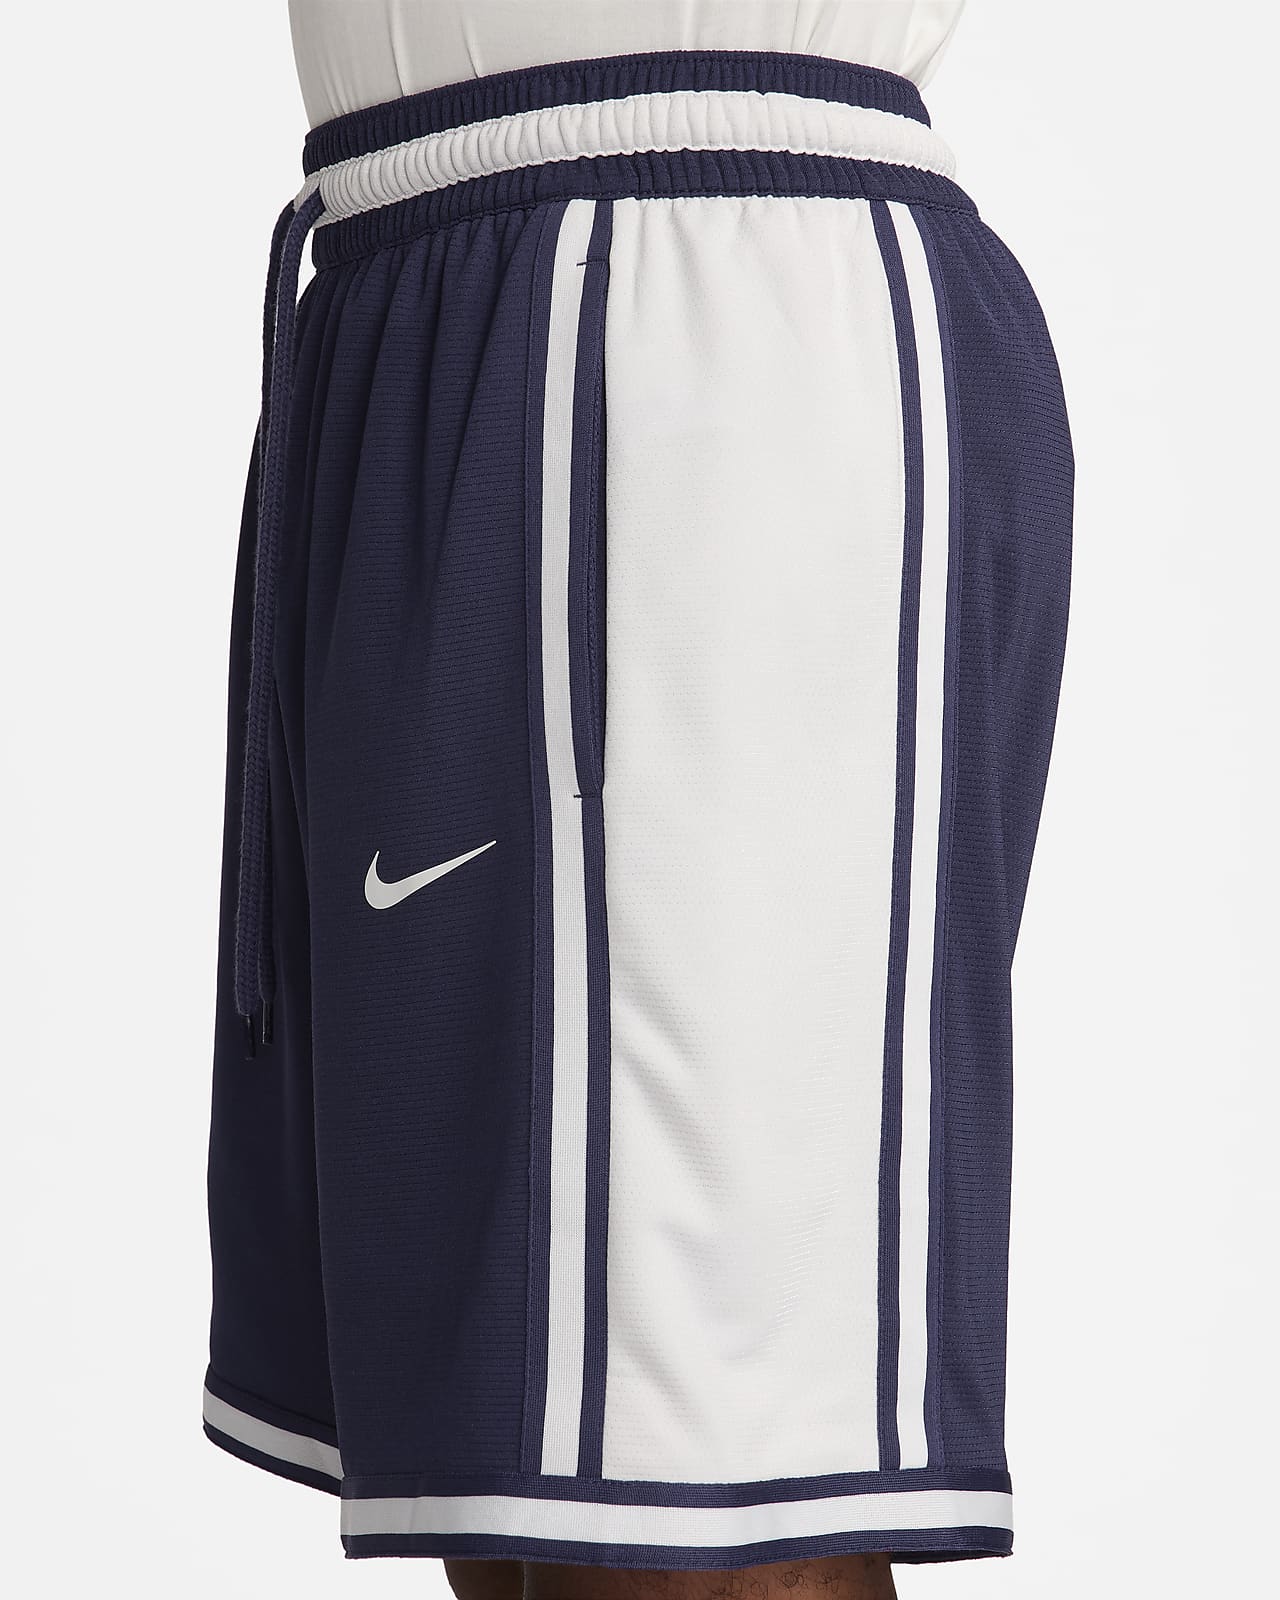 Nike Men's Medium DNA Loose Fit Basketball Shorts Red 925819-657